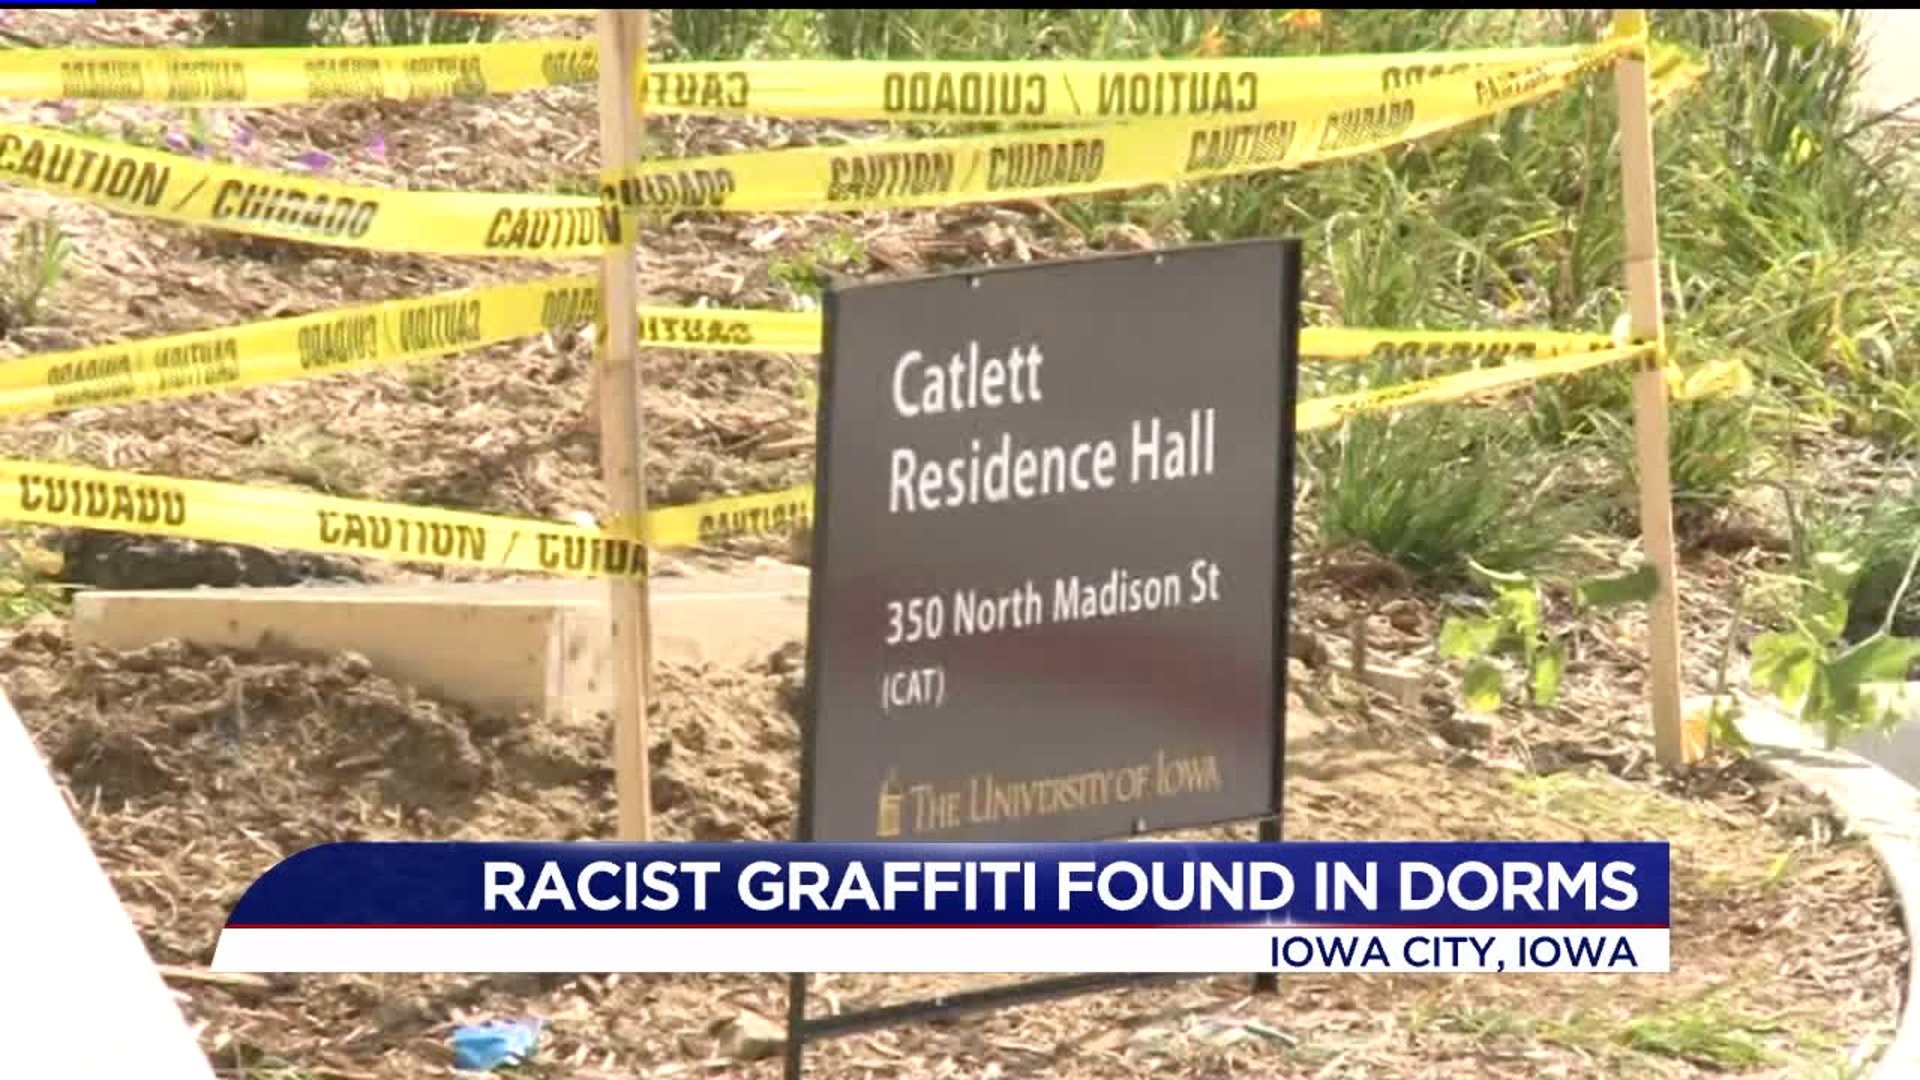 racist graffiti found on campus in Iowa City